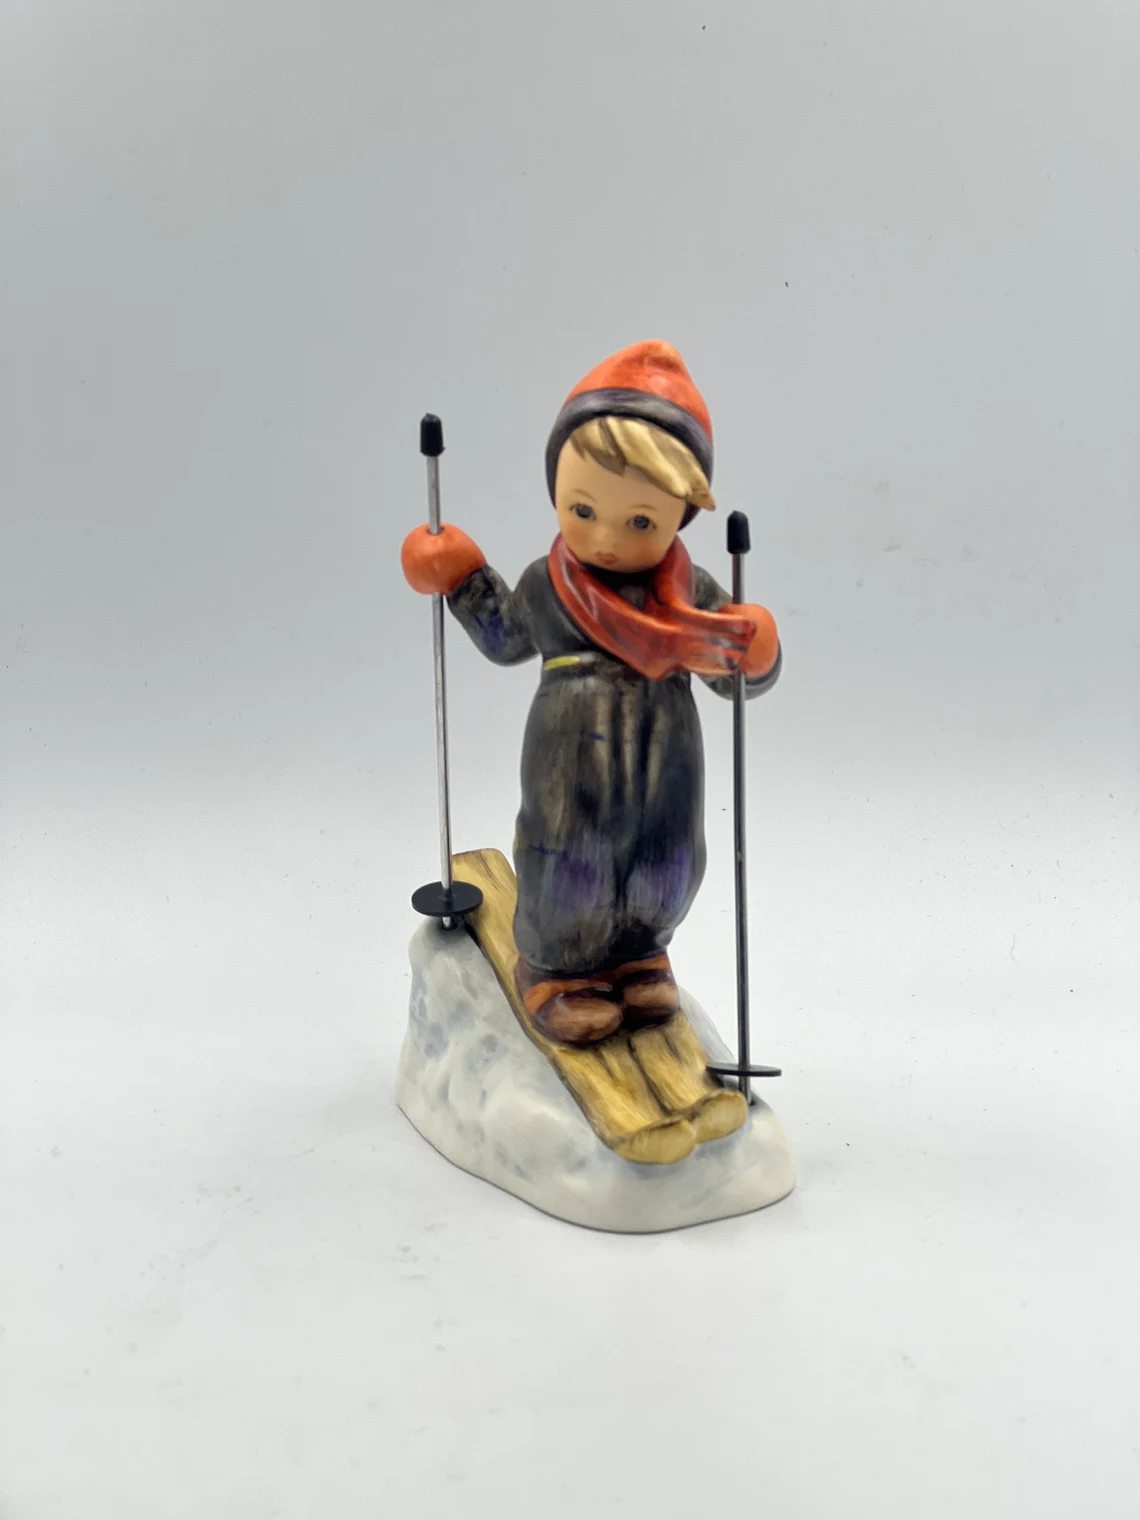 Hummel Goebel Figurine Skier Boy On Ski Slope W. Germany TMK 7 - $108.95